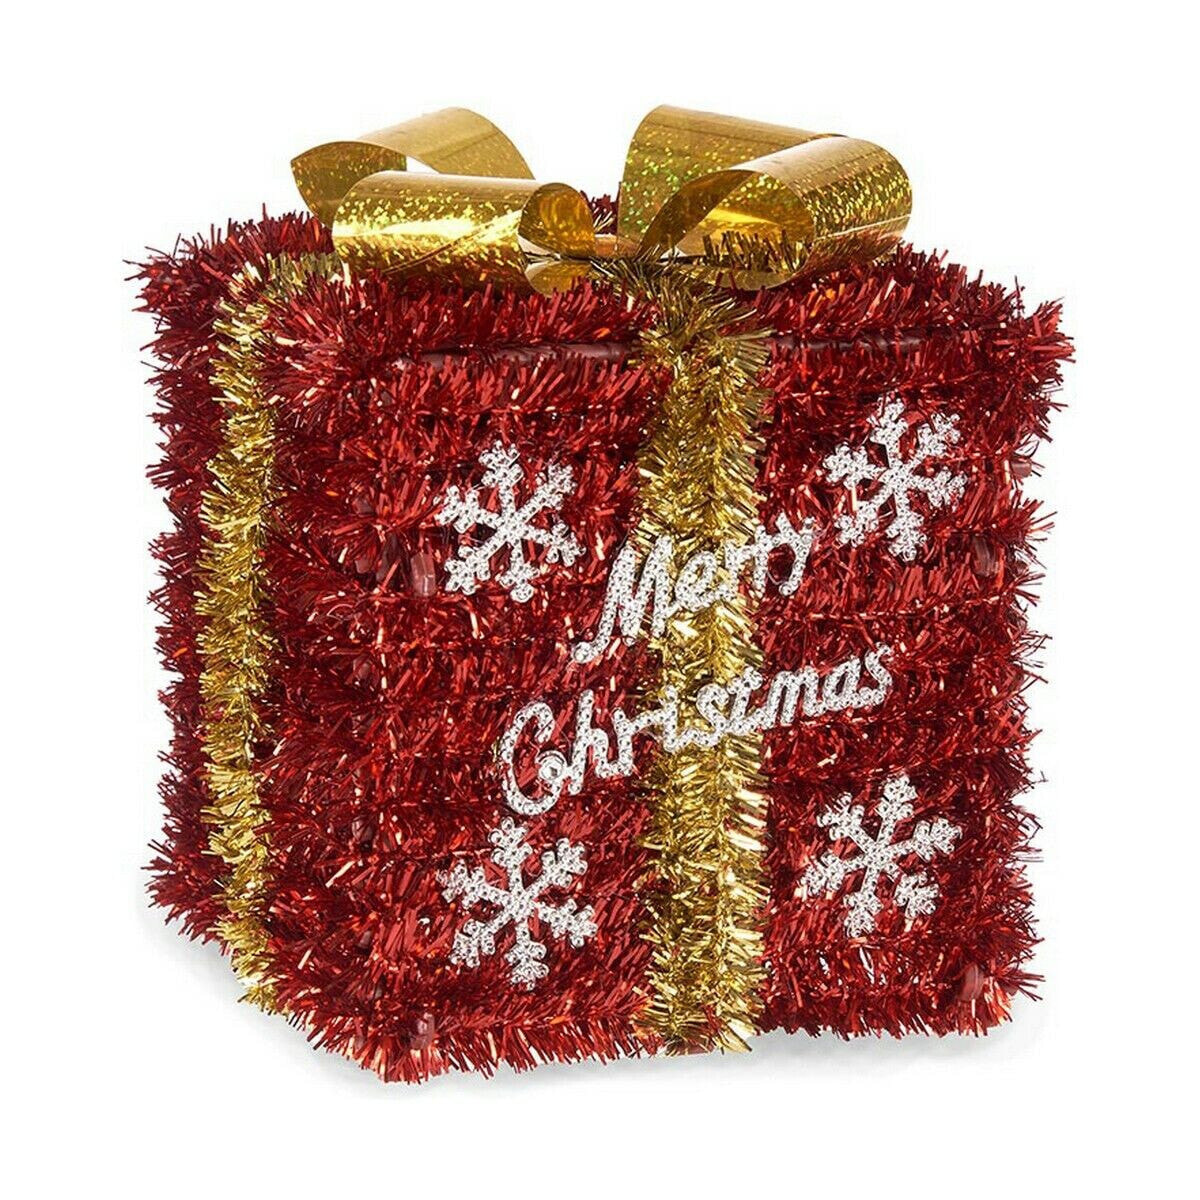 Gift Box Red Golden White Plastic polypropylene 13 x 17 x 13 cm